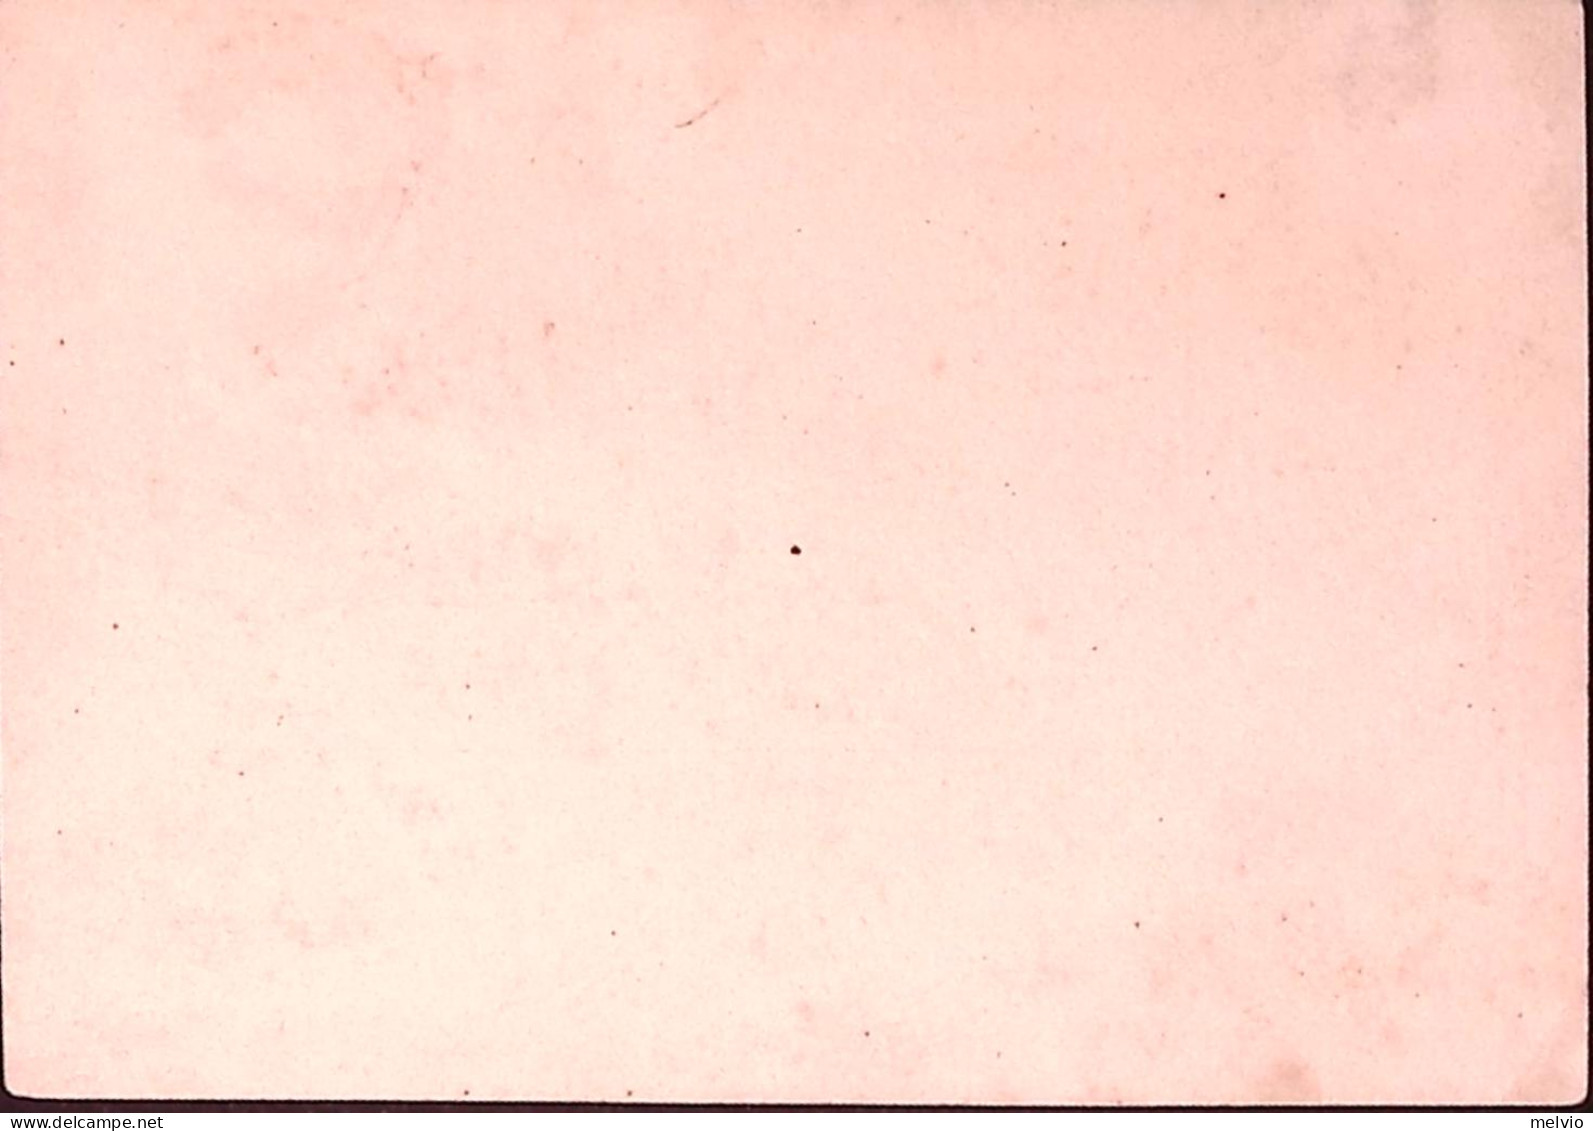 1874-Cartolina Postale C.10 (C1) Nuova - Entero Postal